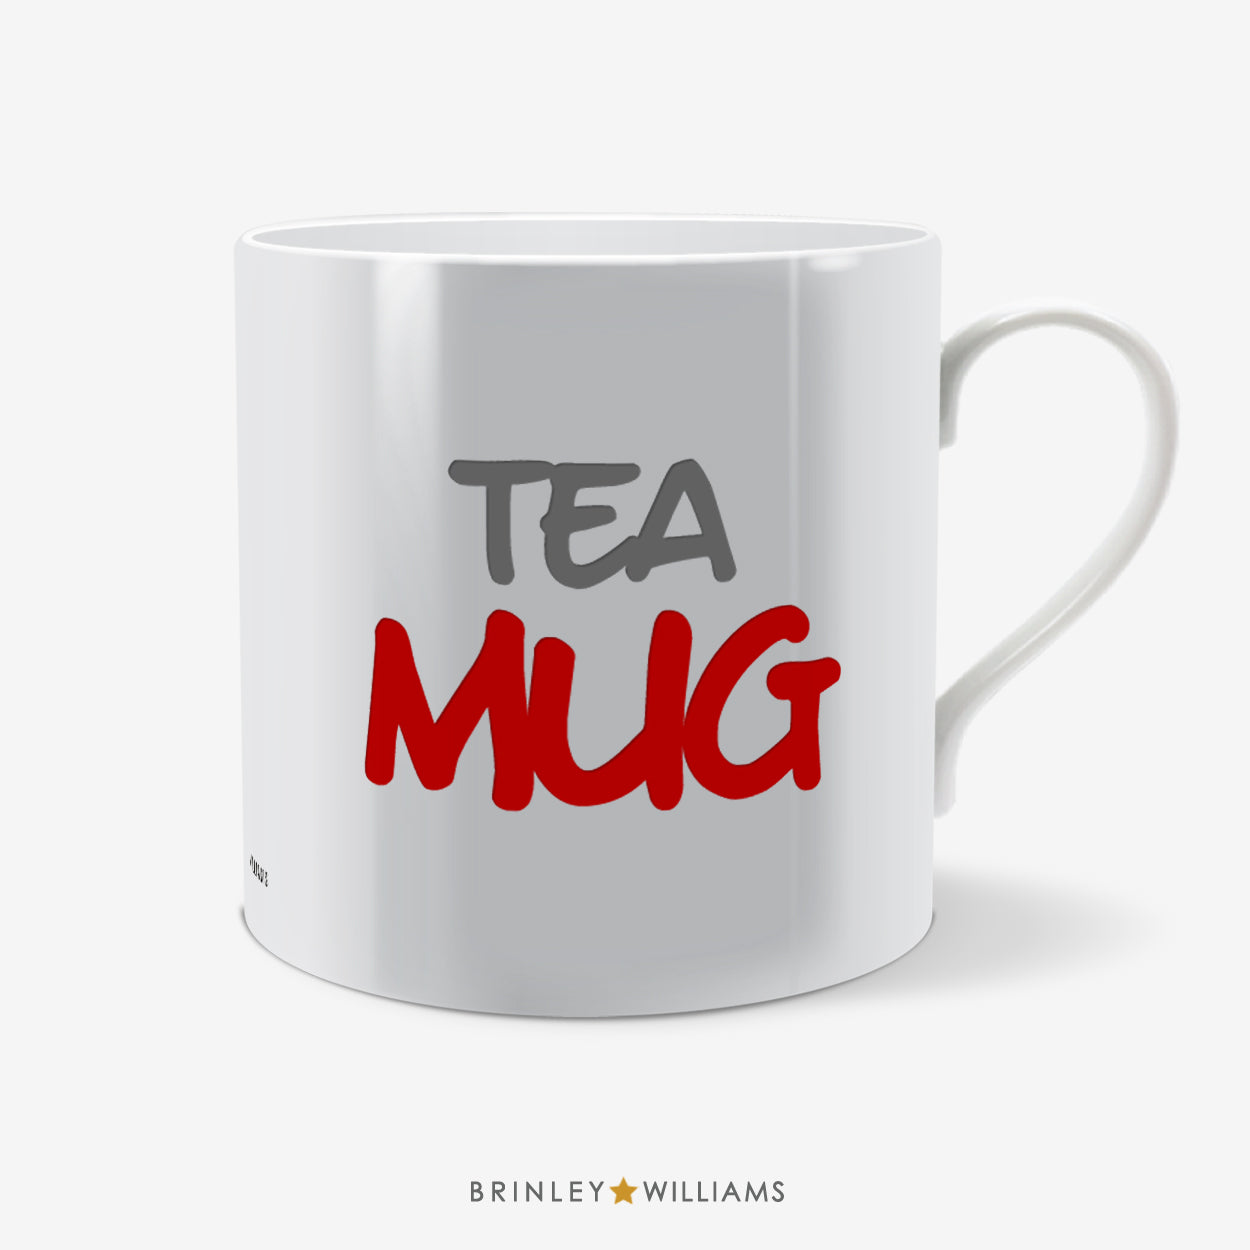 Tea Mug Fun Mug - Red